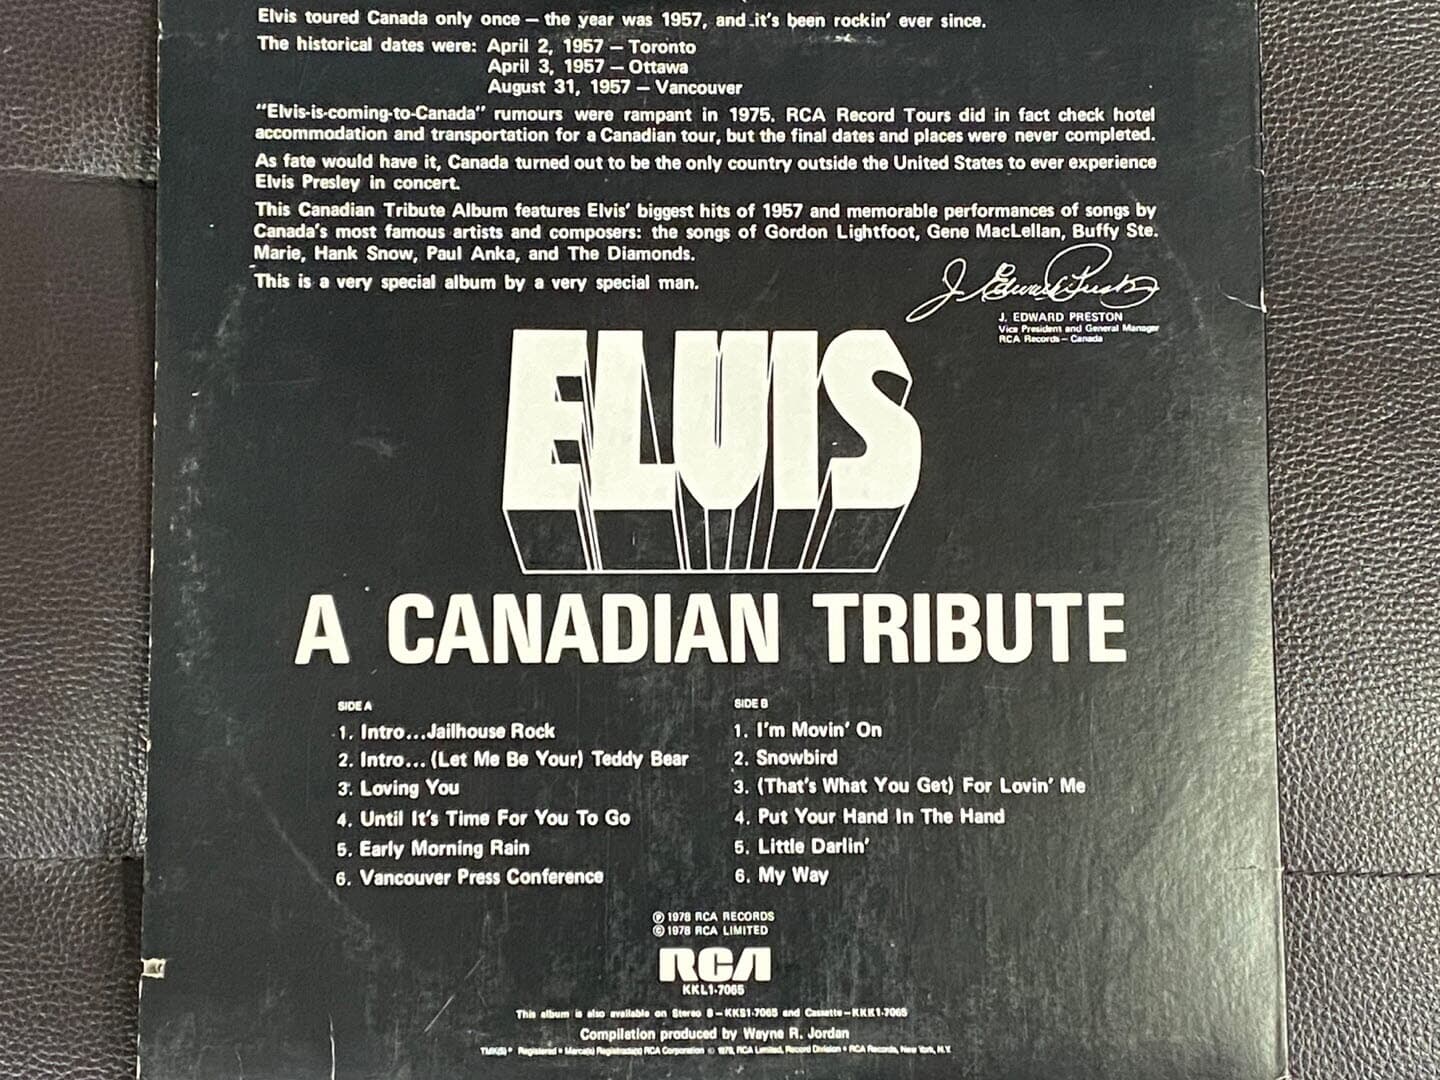 [LP] 엘비스 프레슬리 - Elvis Presley - A Canadian Tribute Gold Vinyl LP [U.S반]